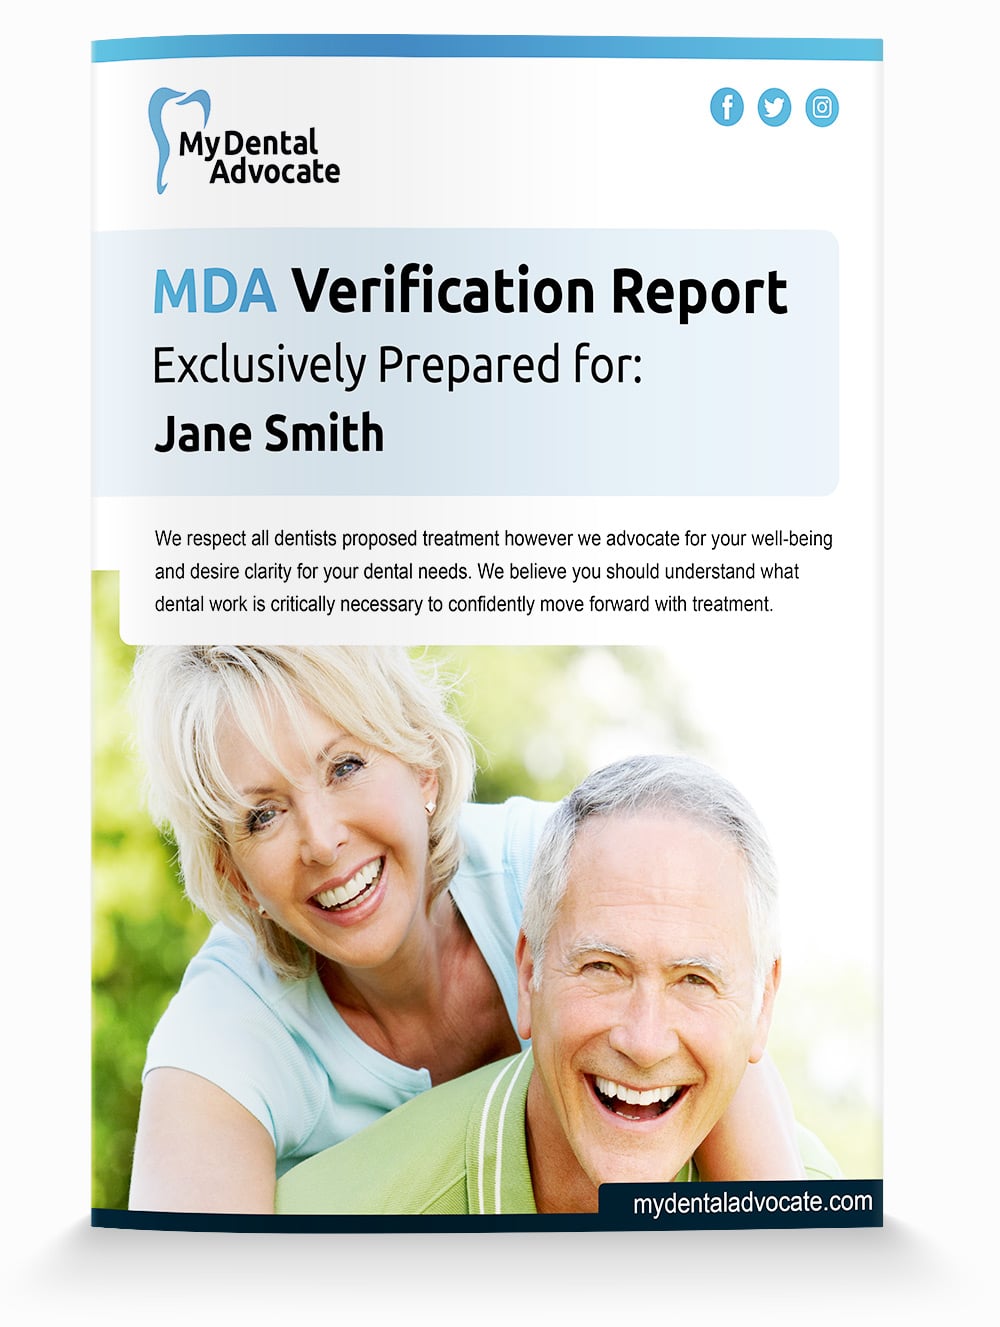 MDA Verification Report Cover Mockup